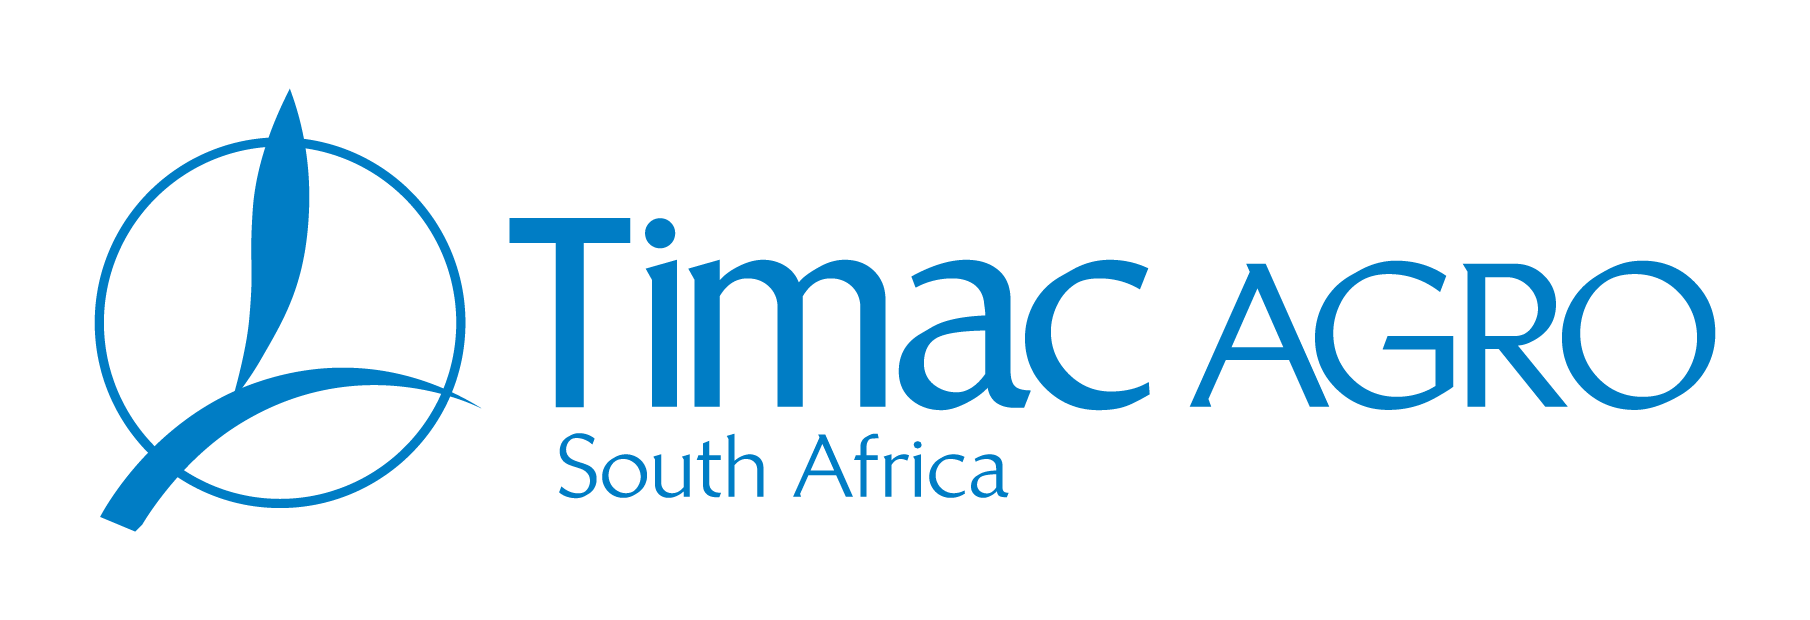 2018_Timac_Agro_New-Logo_Blue